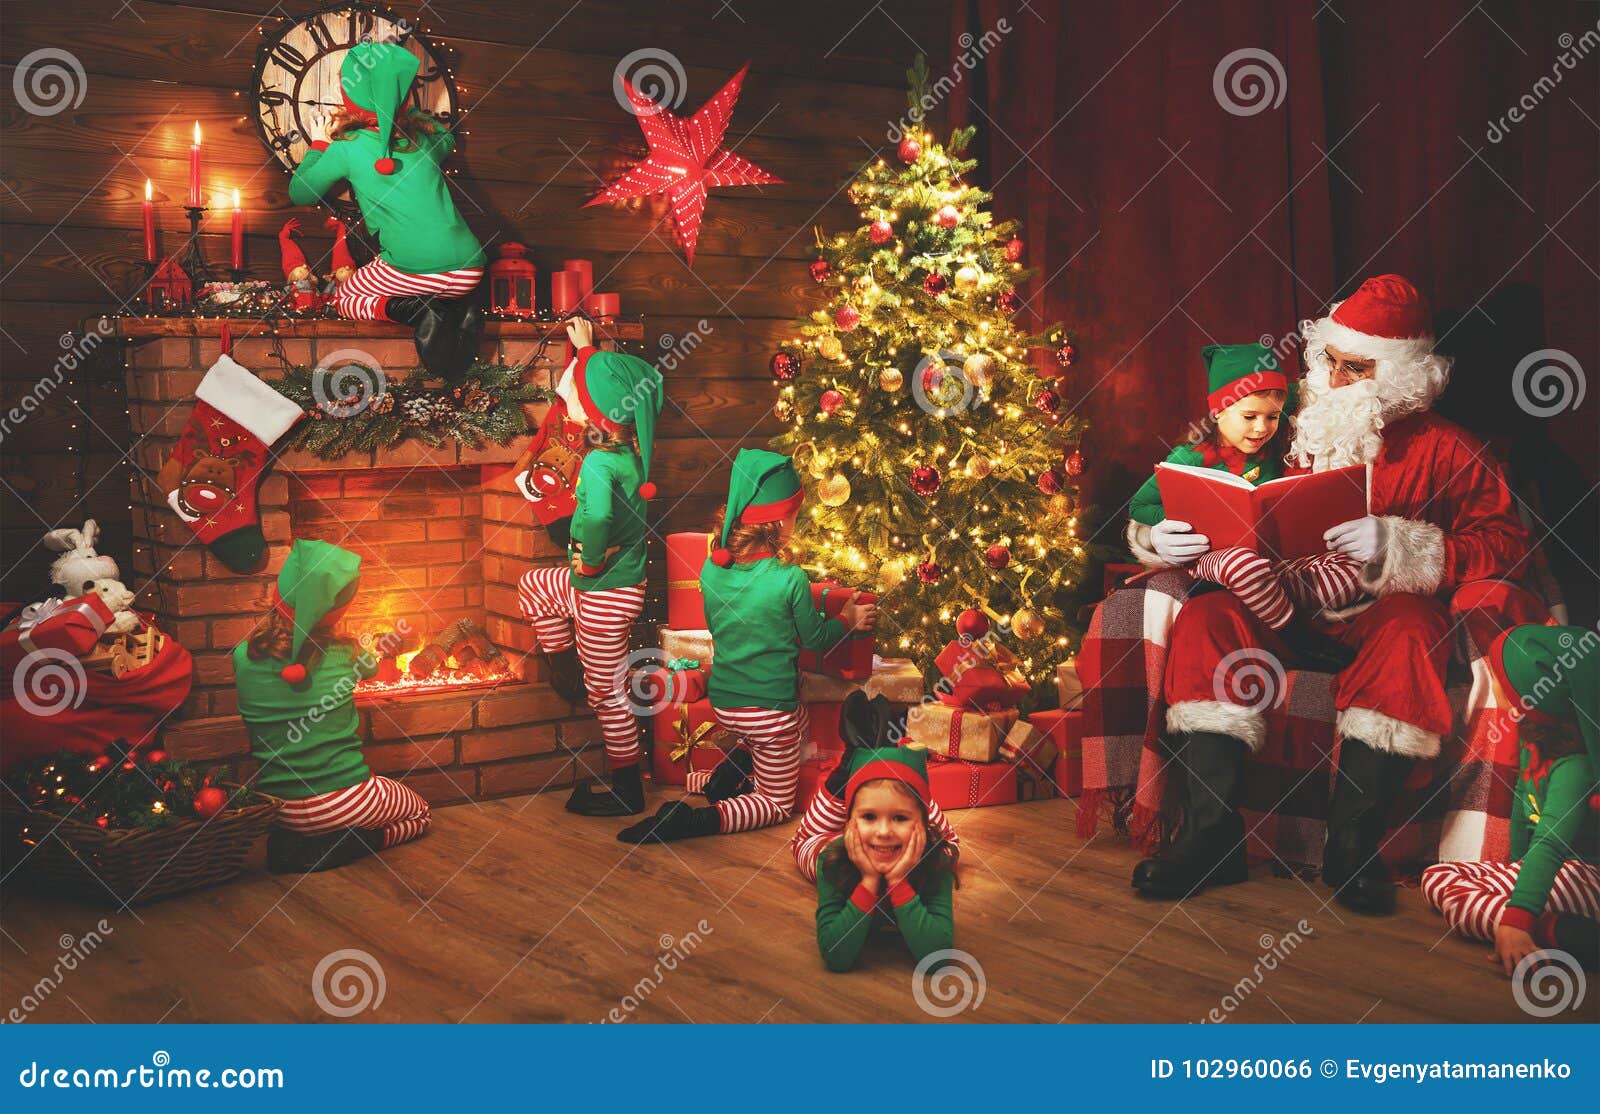 santa claus and his elves